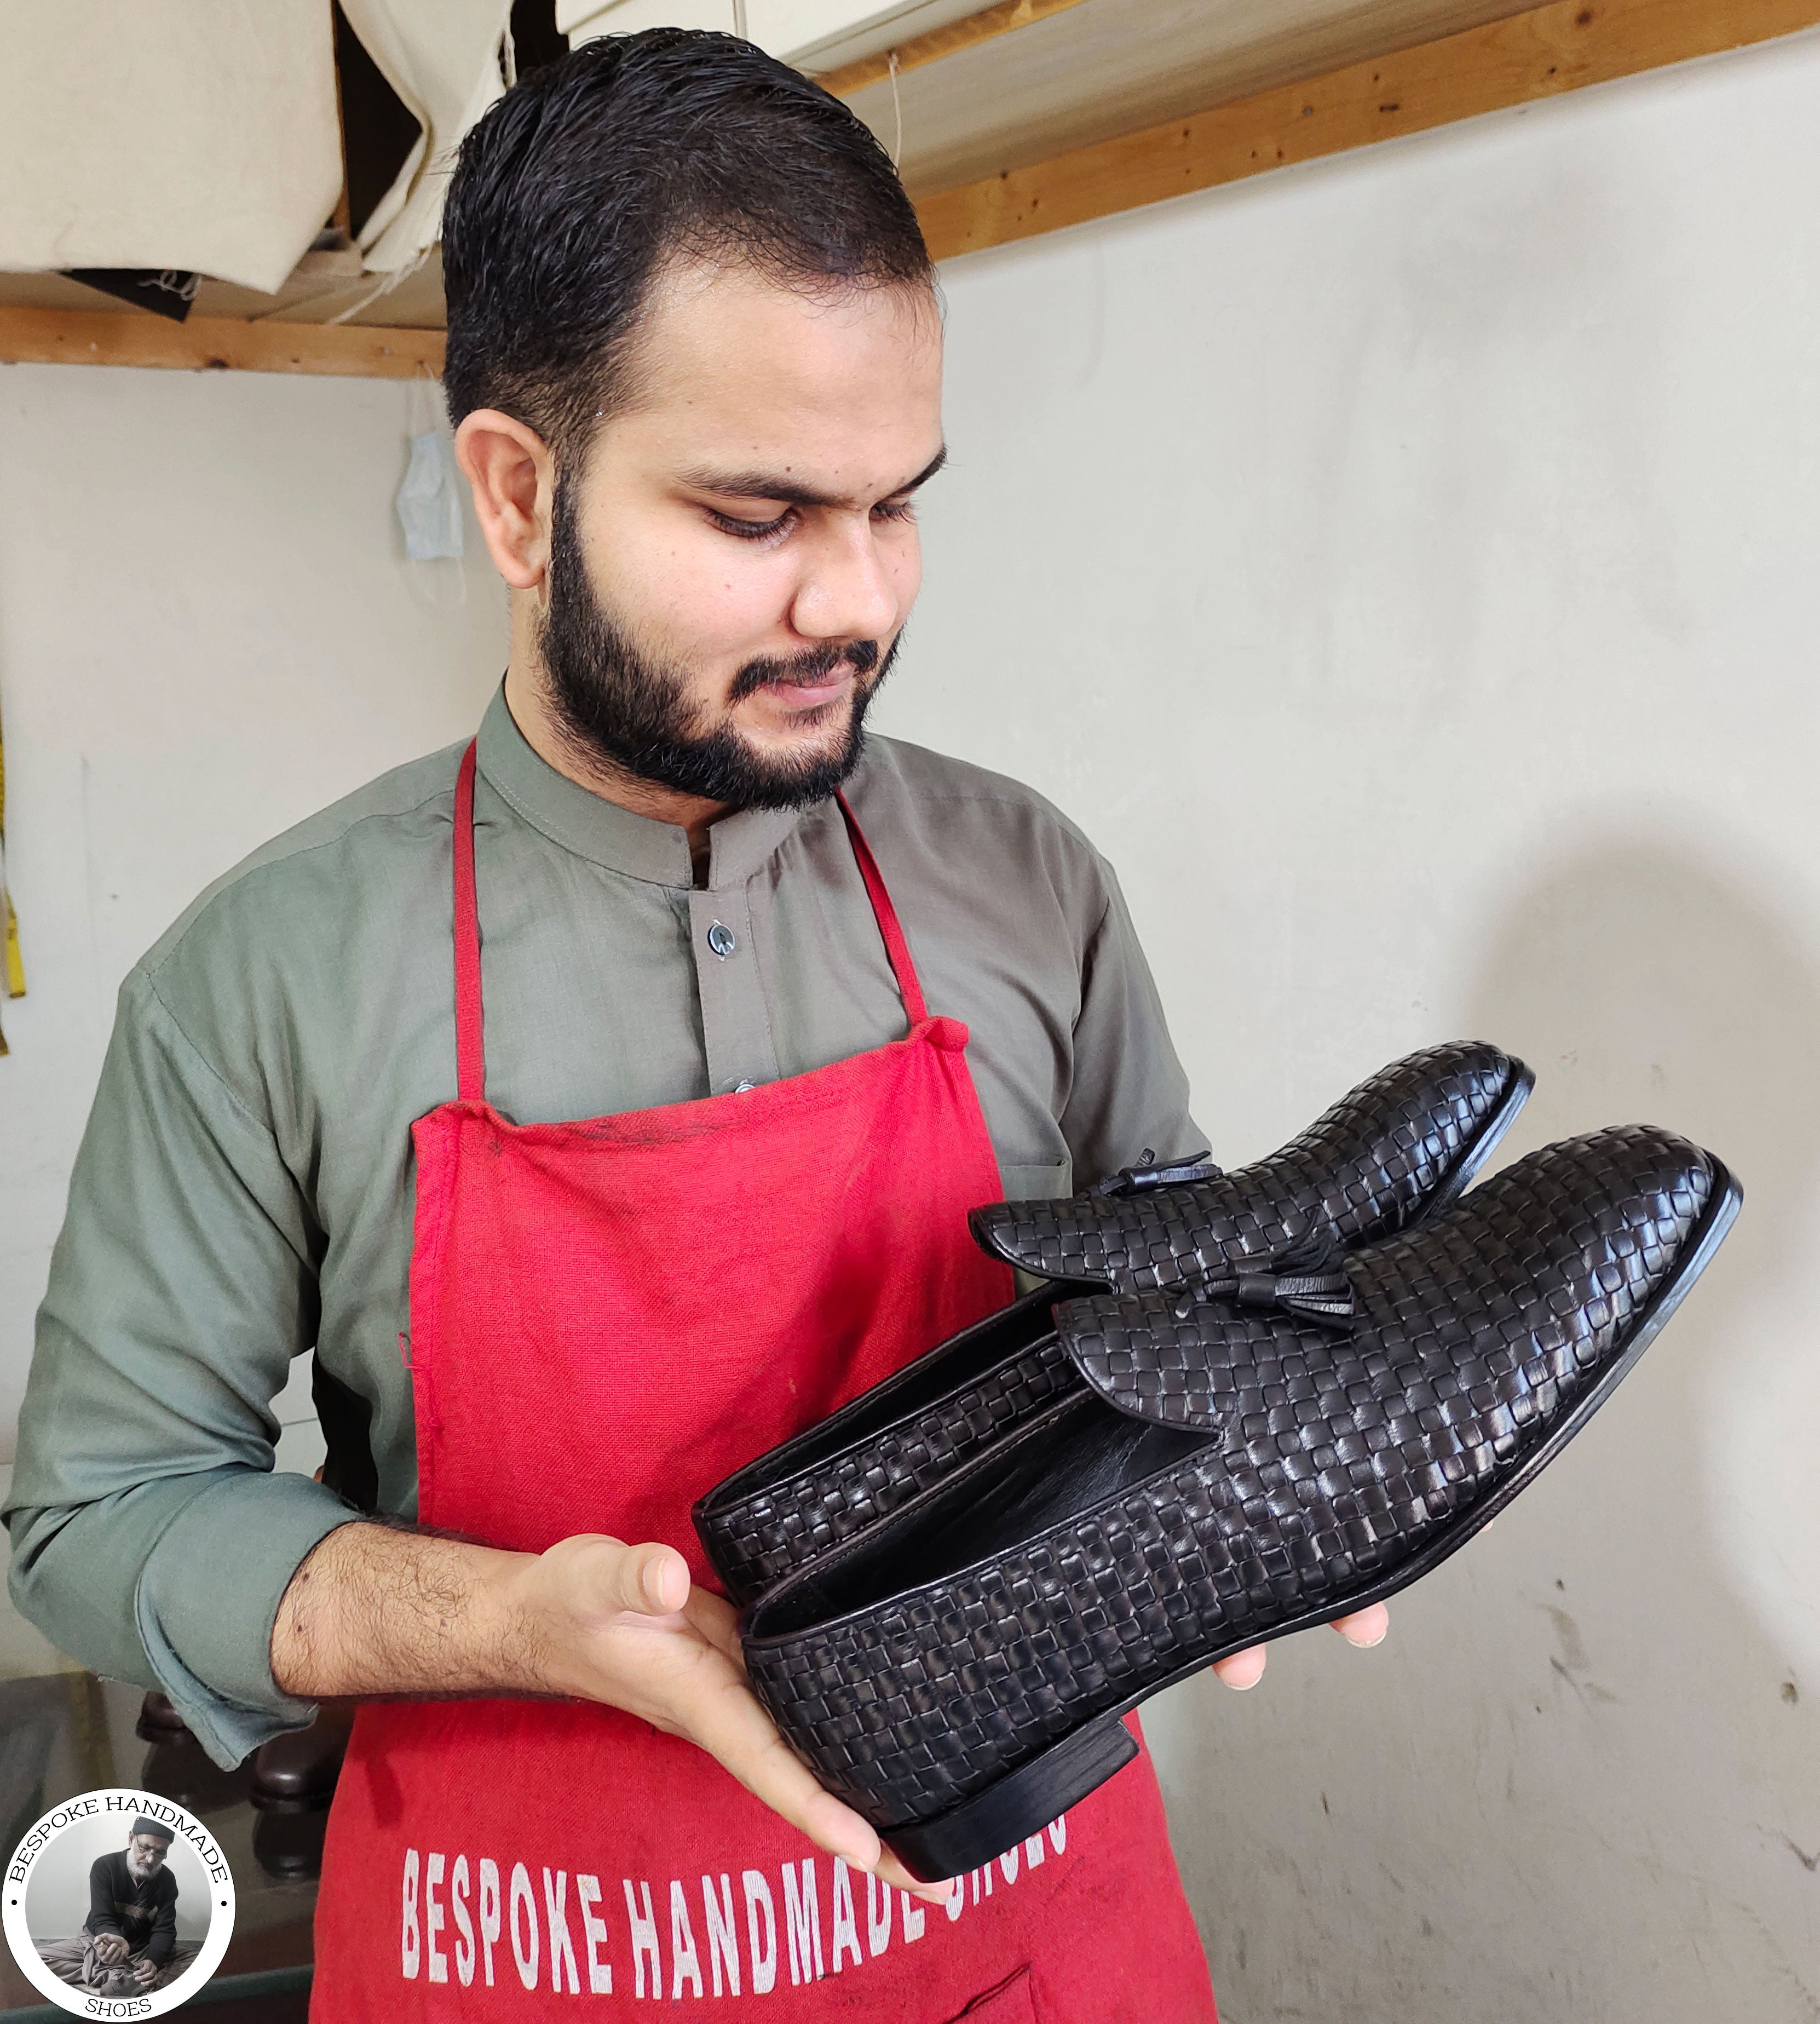 Bespoke Handmade Dress Shoes, Men’s Black Woven Leather Tassels Moccasin Slip on Formal Shoes